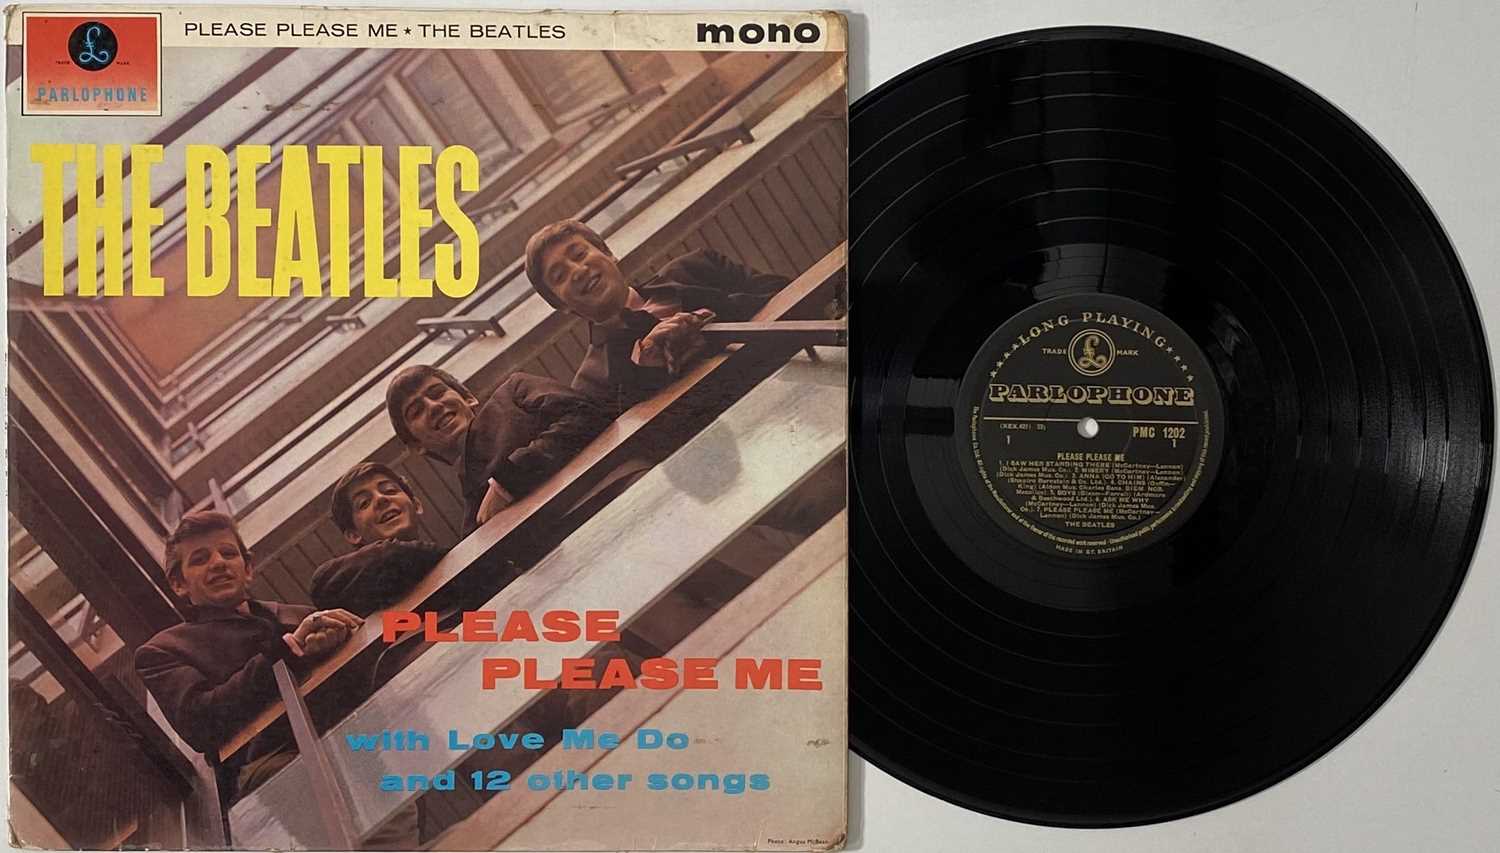 Lot 24 - THE BEATLES - PLEASE PLEASE ME LP (ORIGINAL UK MONO 'BLACK AND GOLD' PRESSING - PMC 1202).